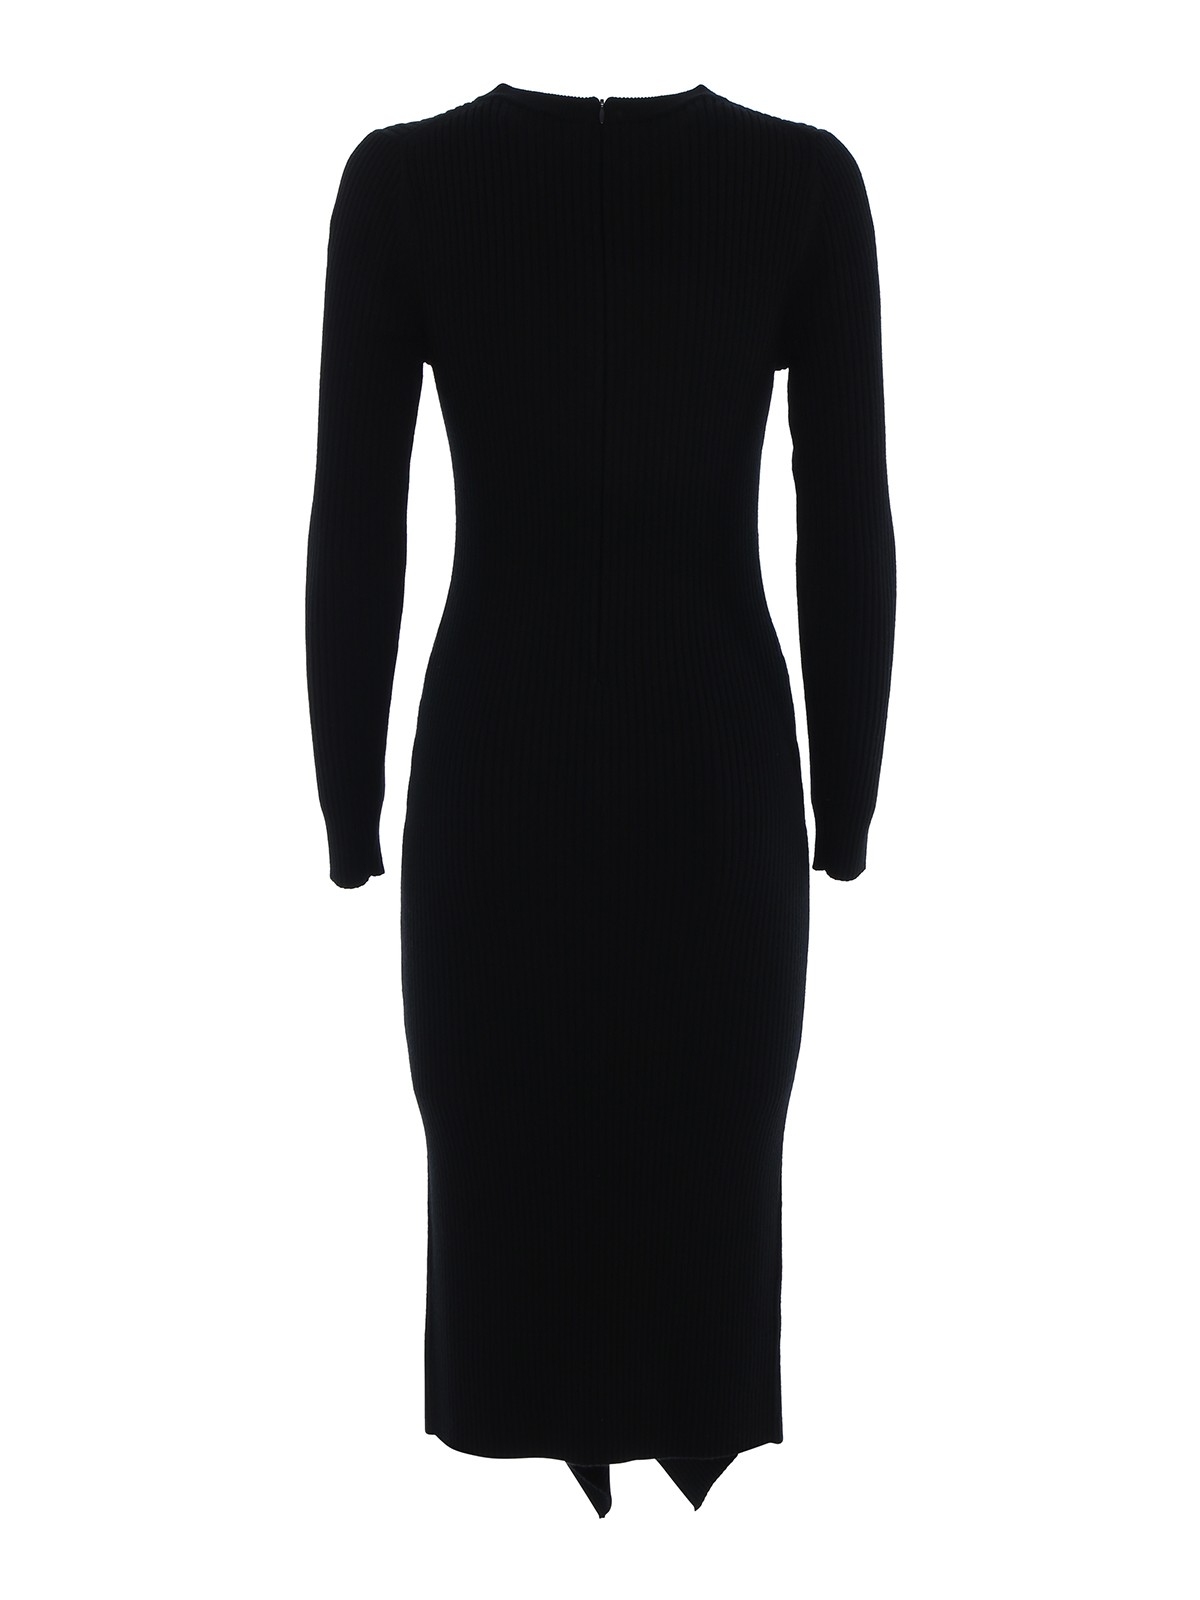 michael kors black knit dress